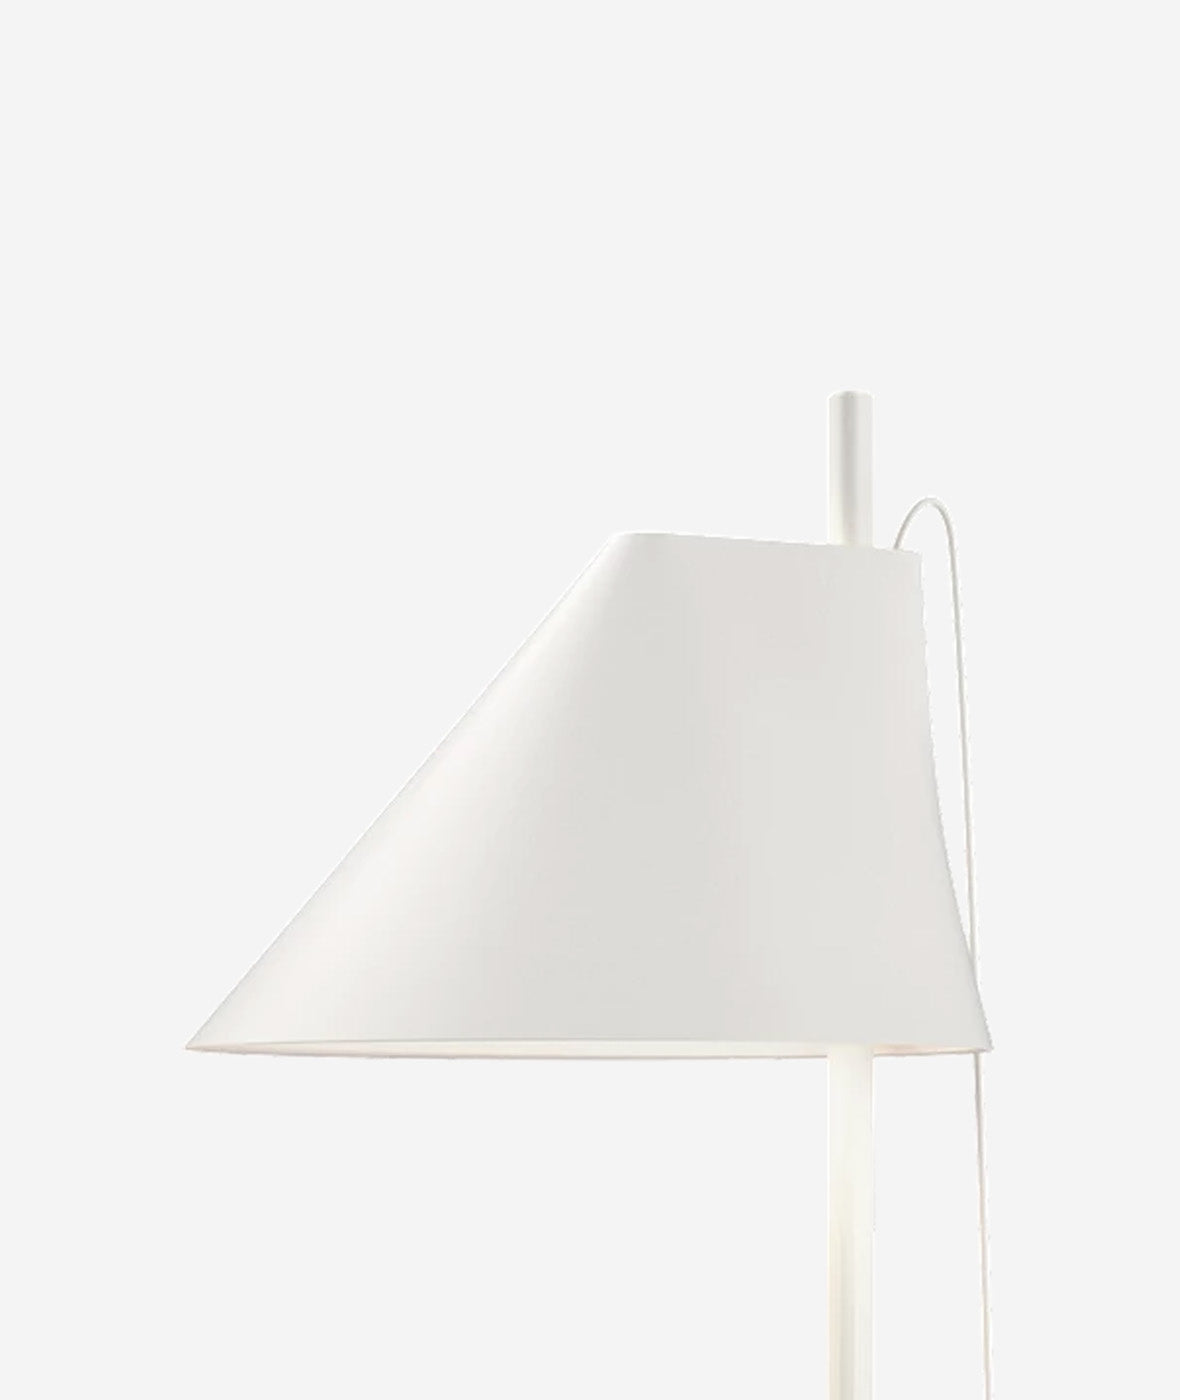 Yuh Floor Lamp by Louis Poulsen, 5744162678